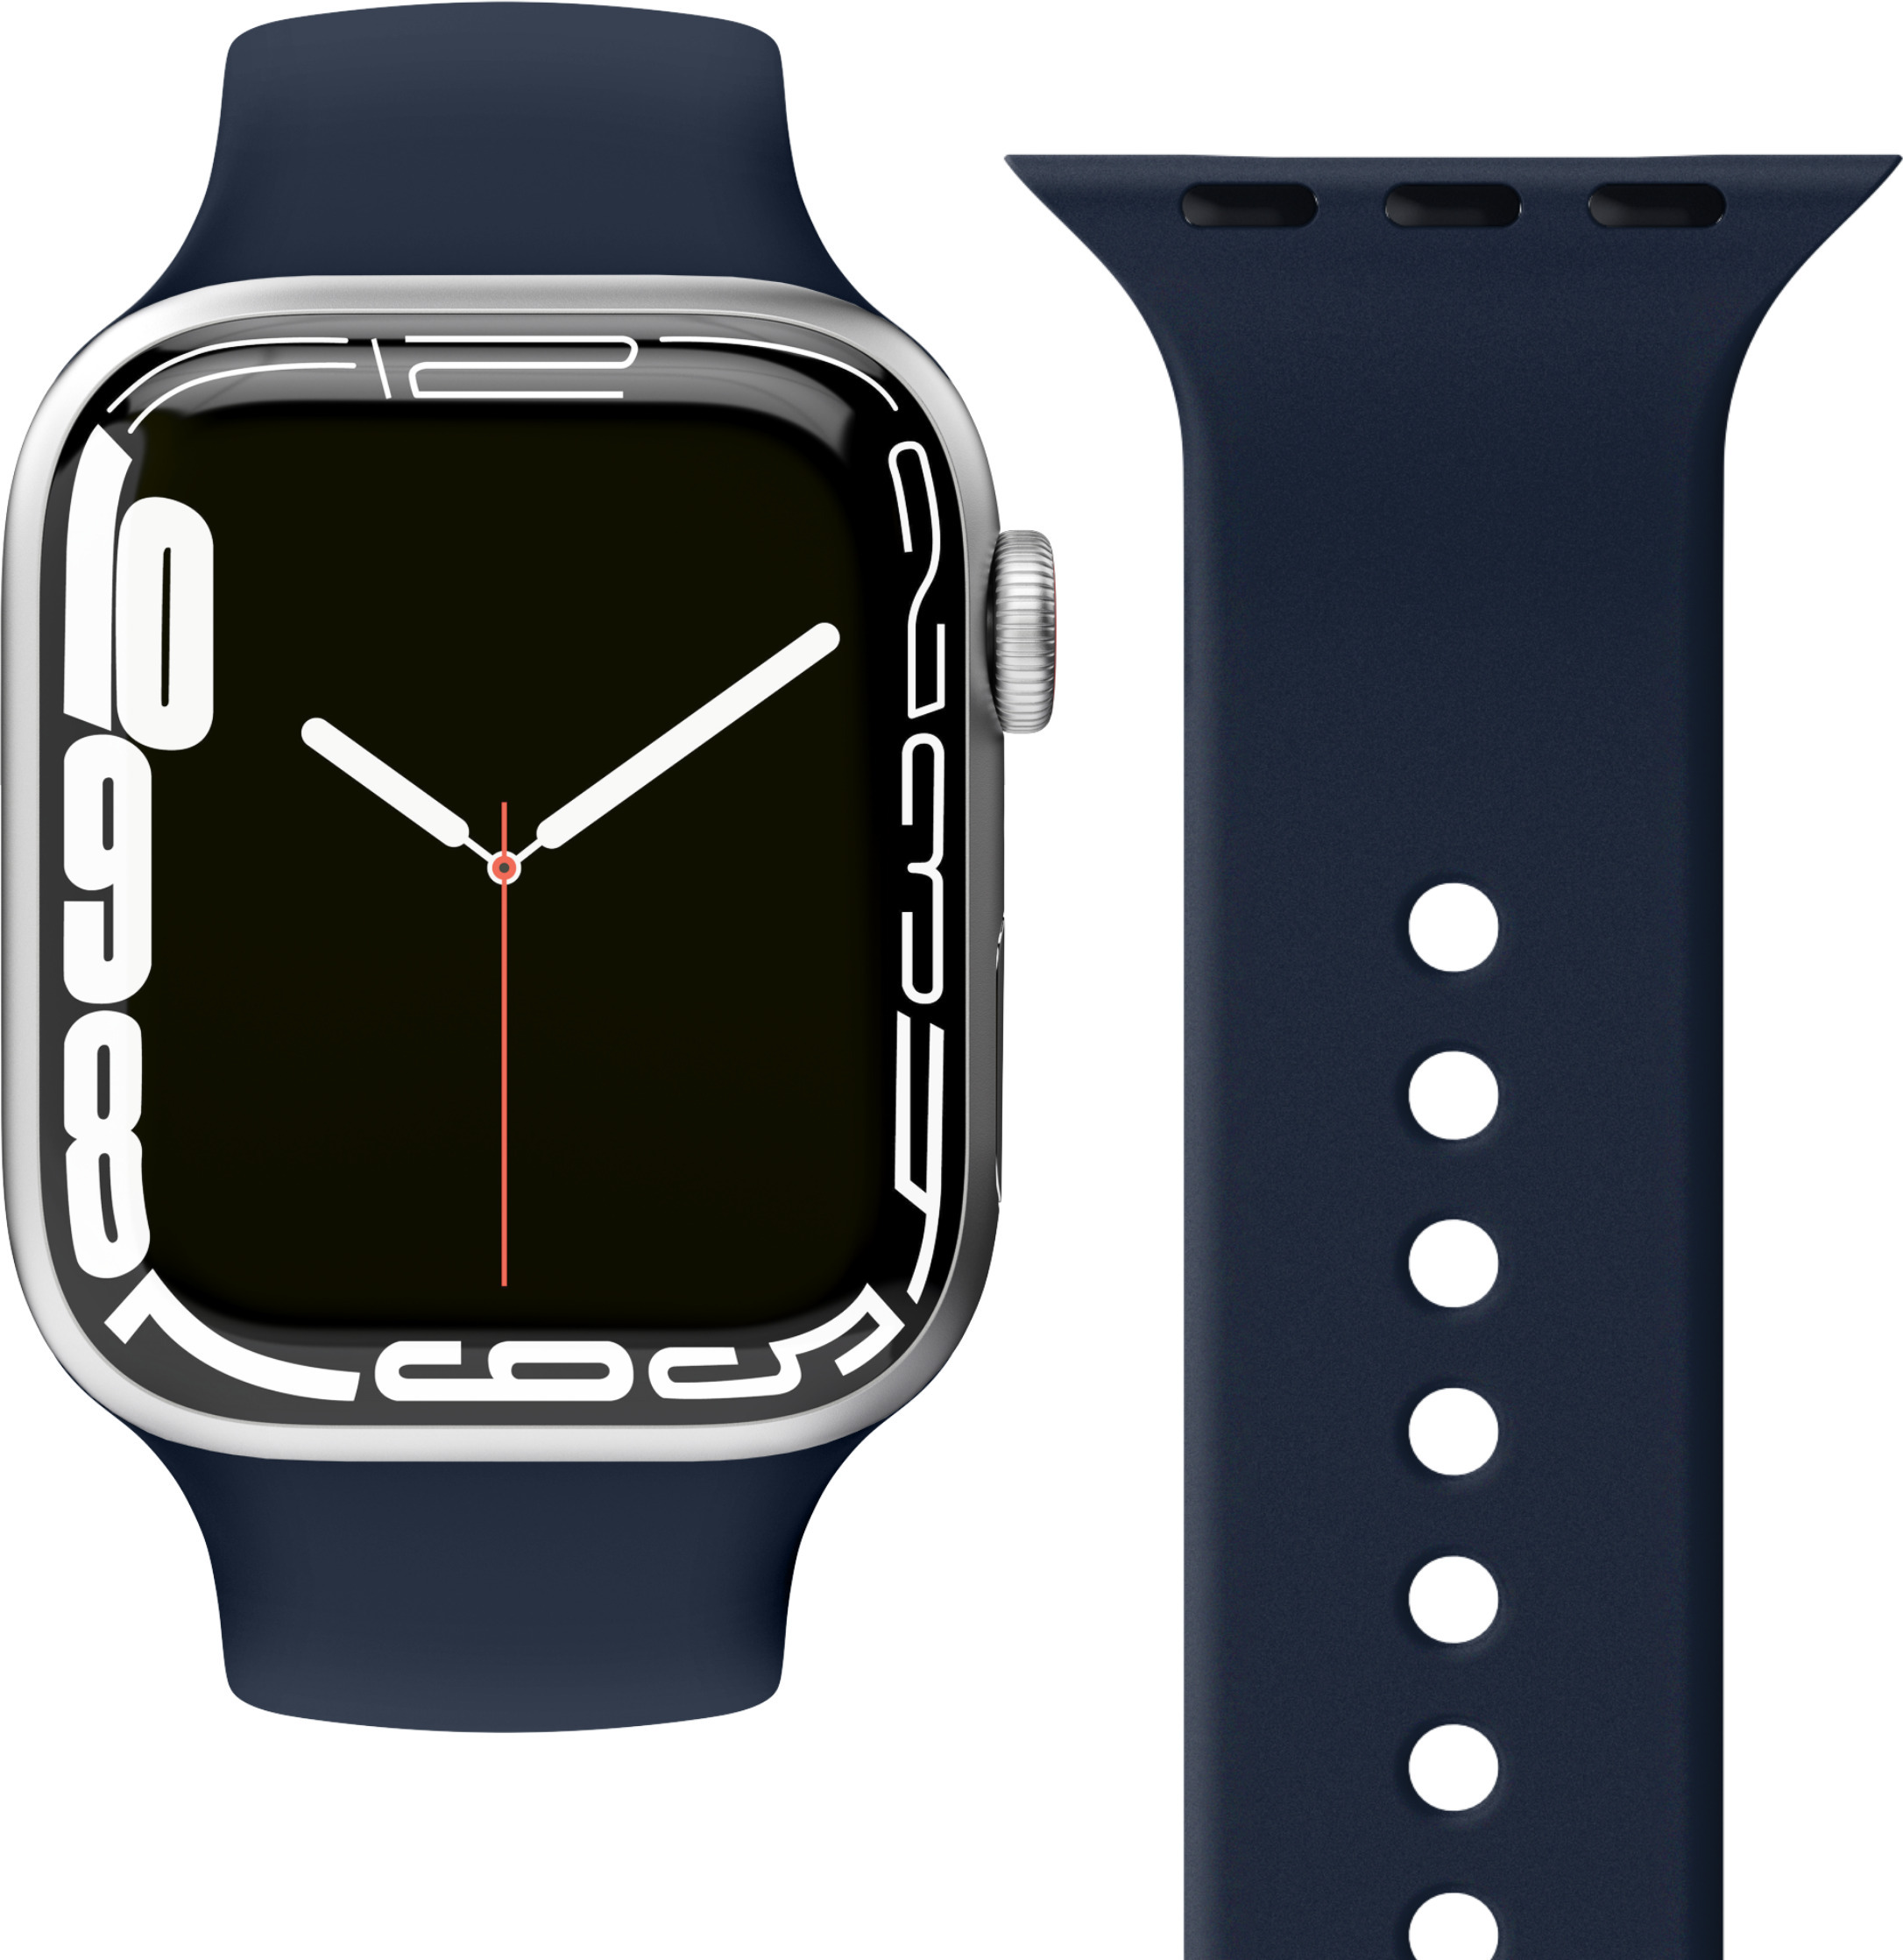 Original Apple watch smart Apple bands, accessories, watch